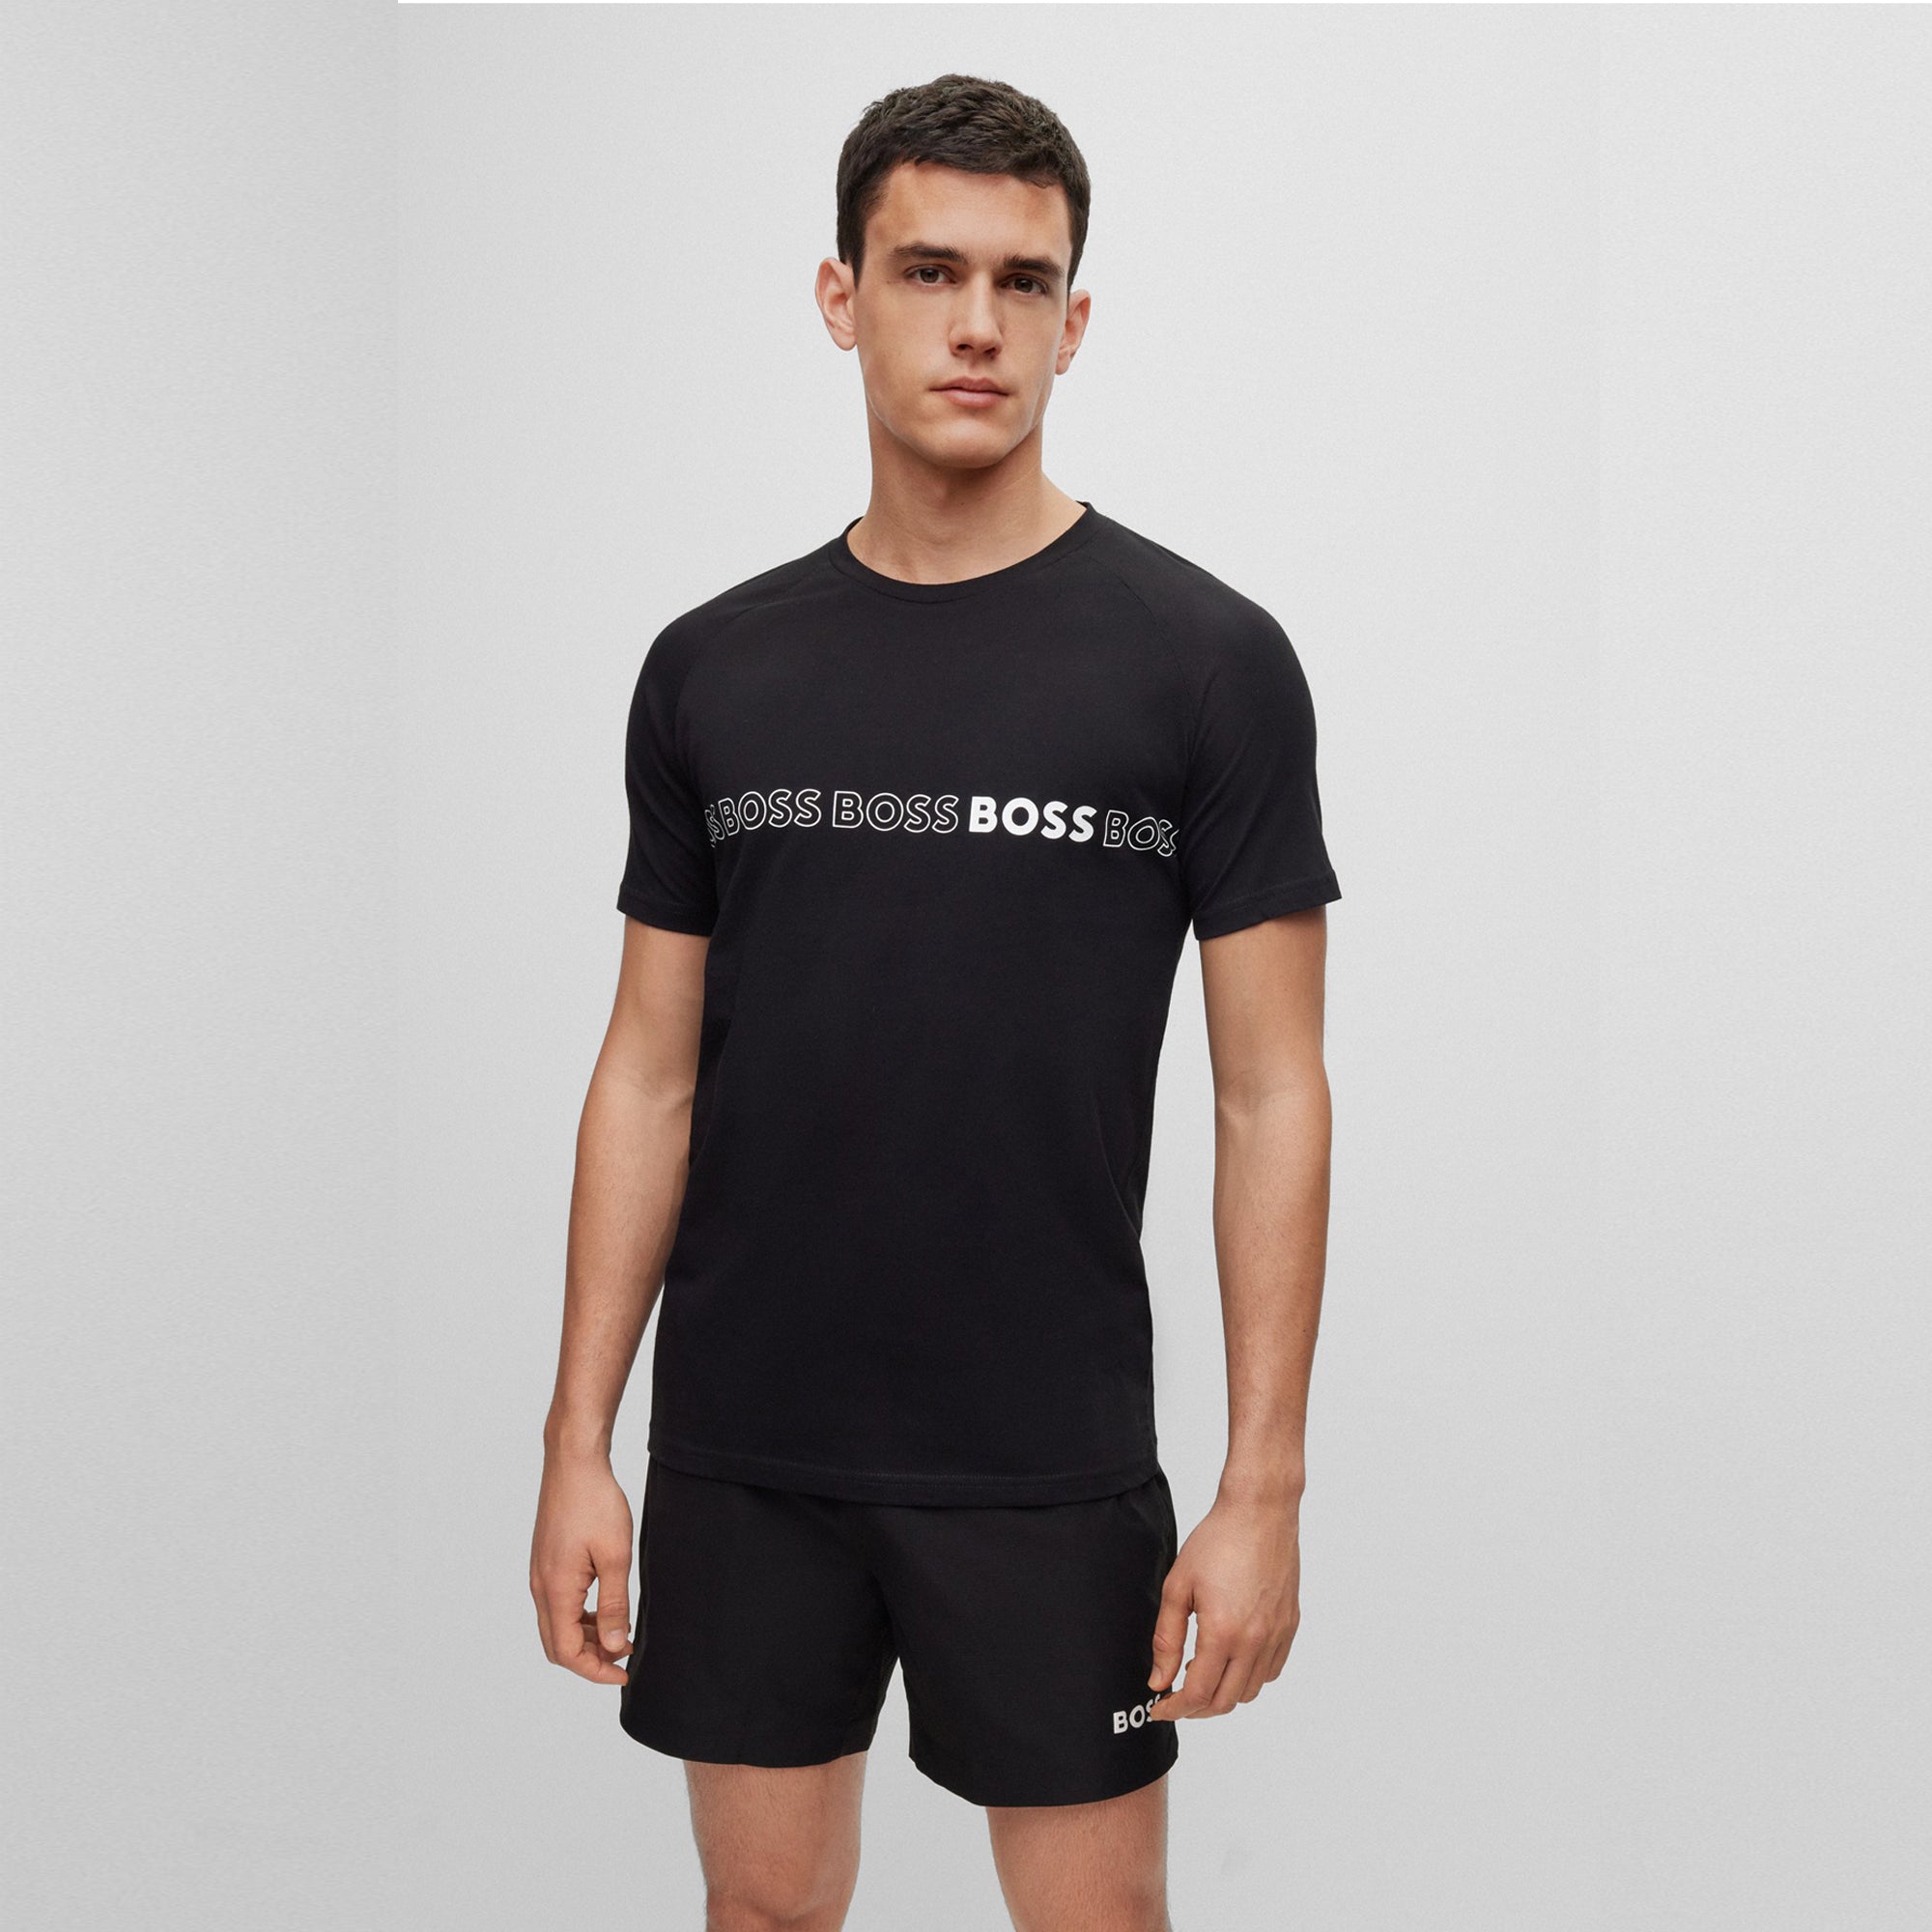 Hugo Boss Mens Slim Fit T-shirt With SPF 50+ Uv Protection Black Large